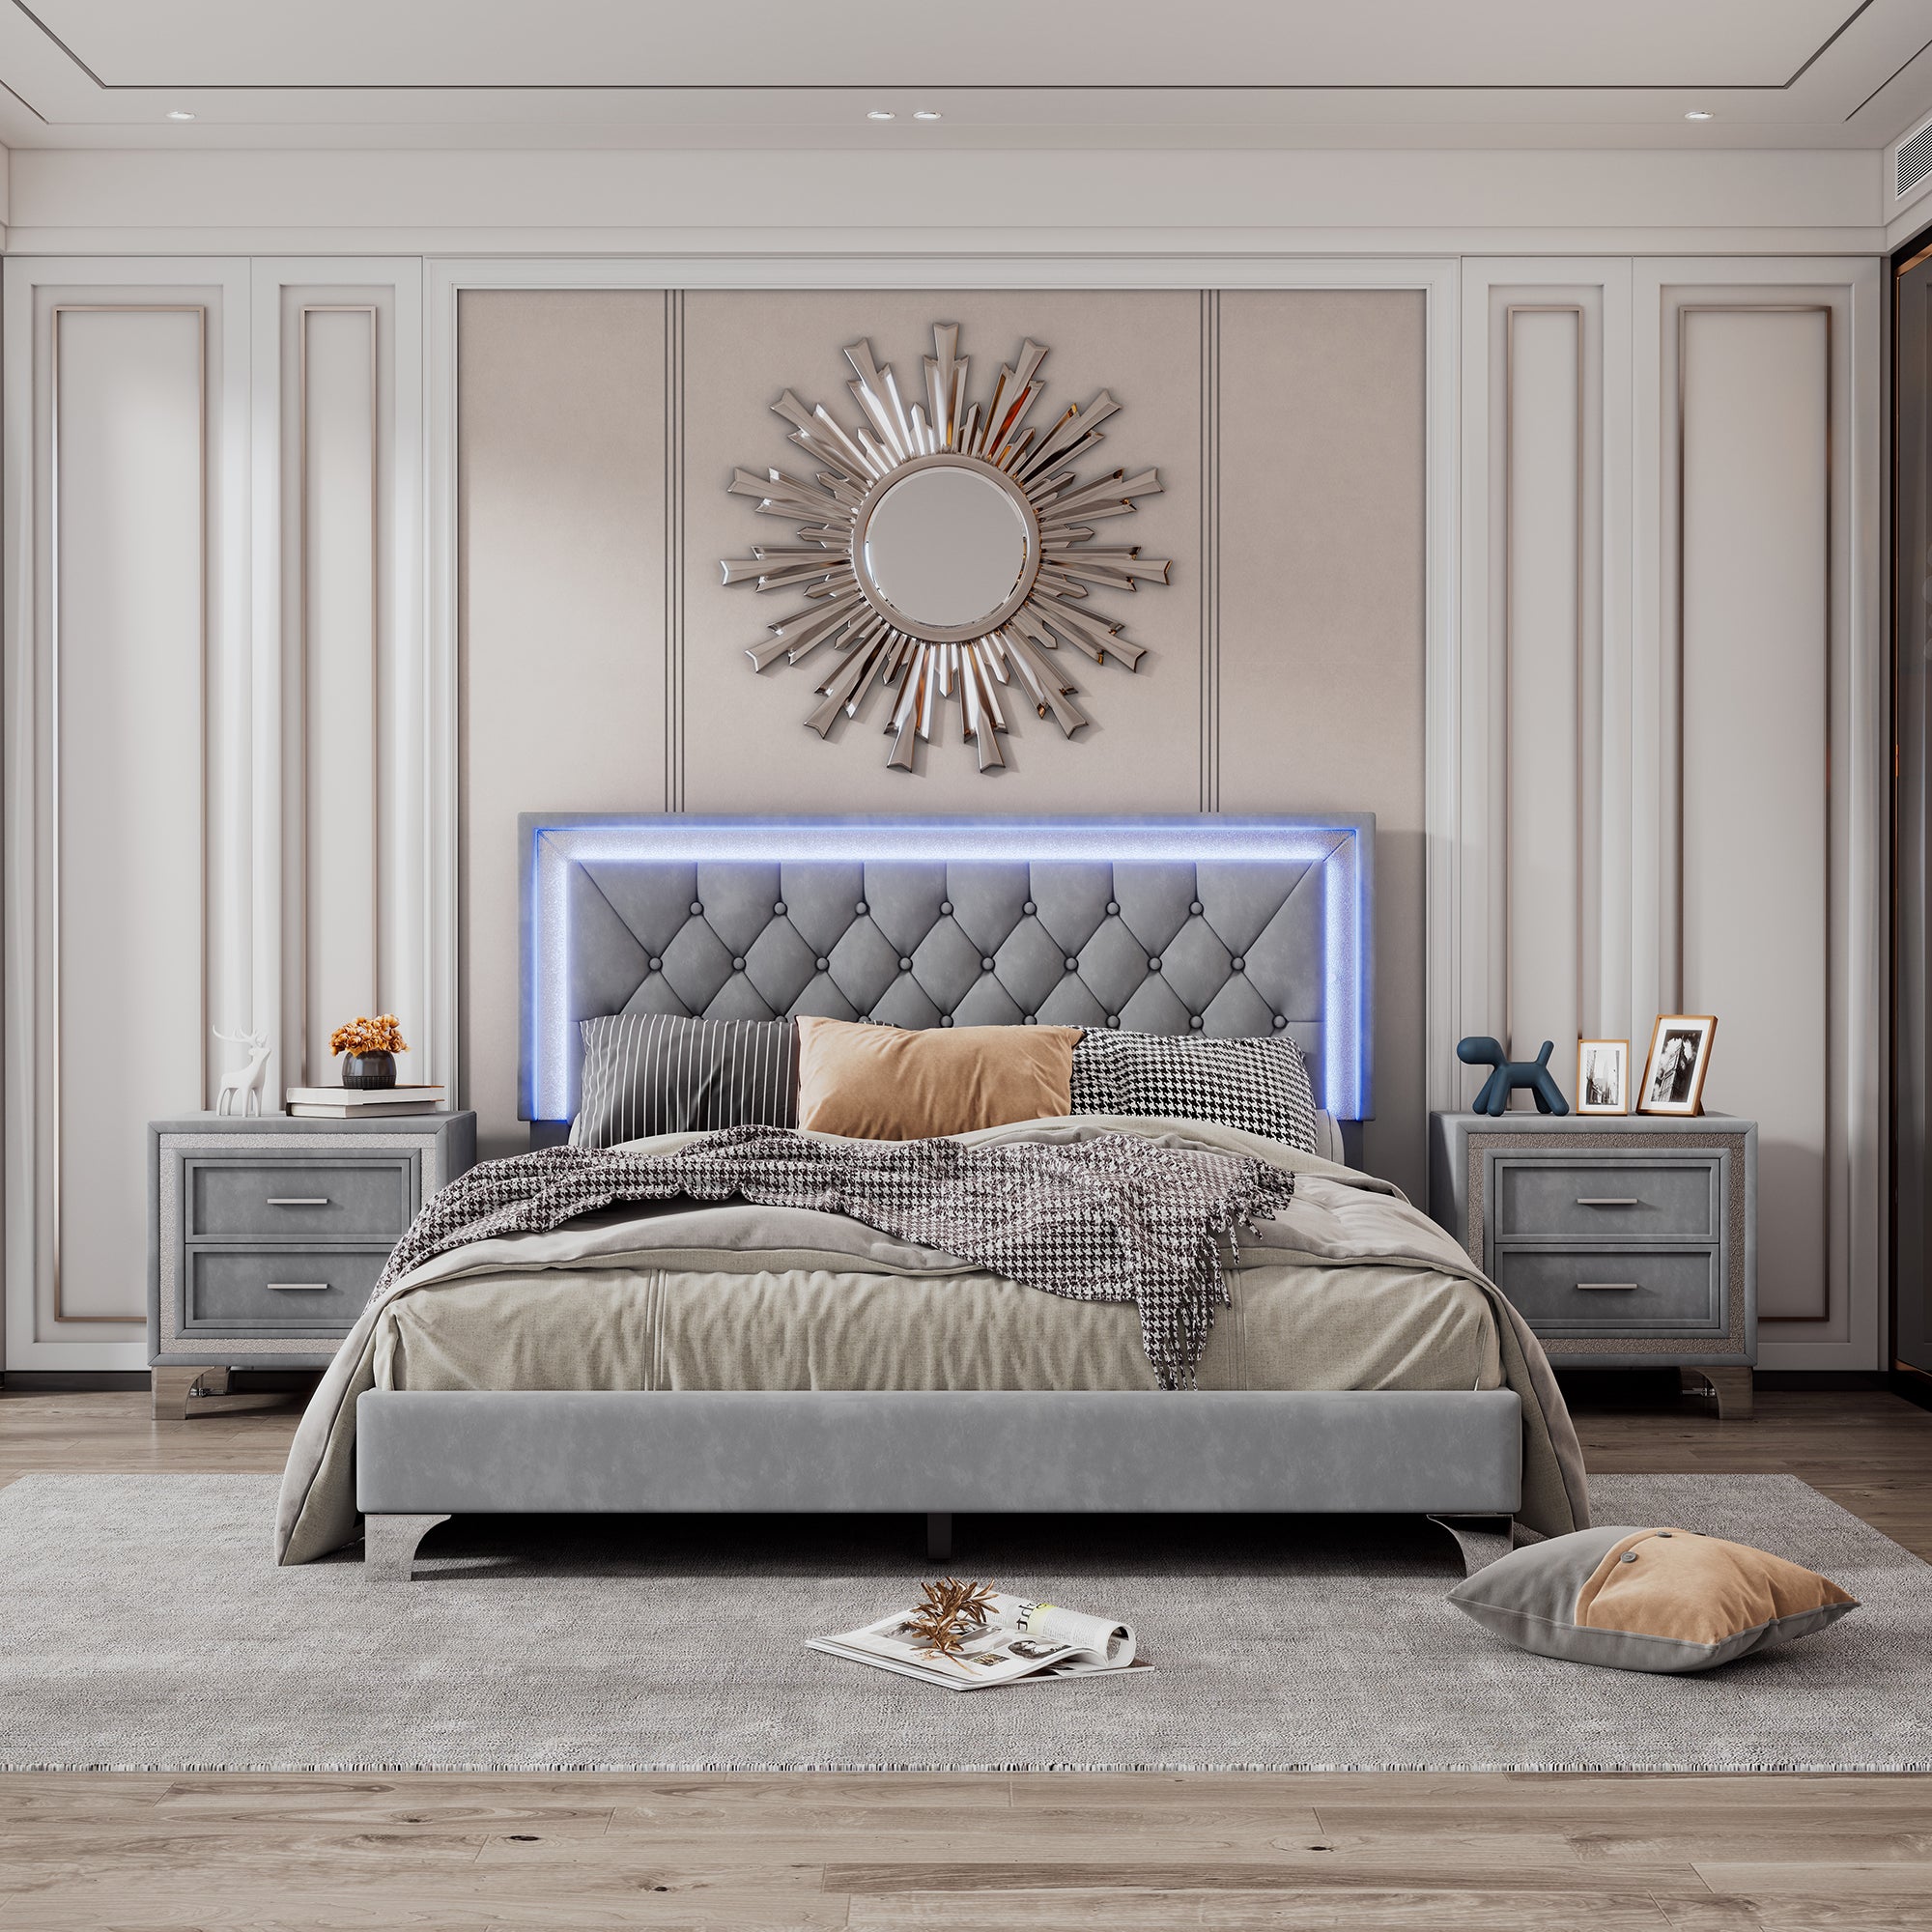 Tiffani 3 Piece Bedroom Sets, Queen Size Velvet Upholstered Platform Bed with LED Lights and Two Nightstands